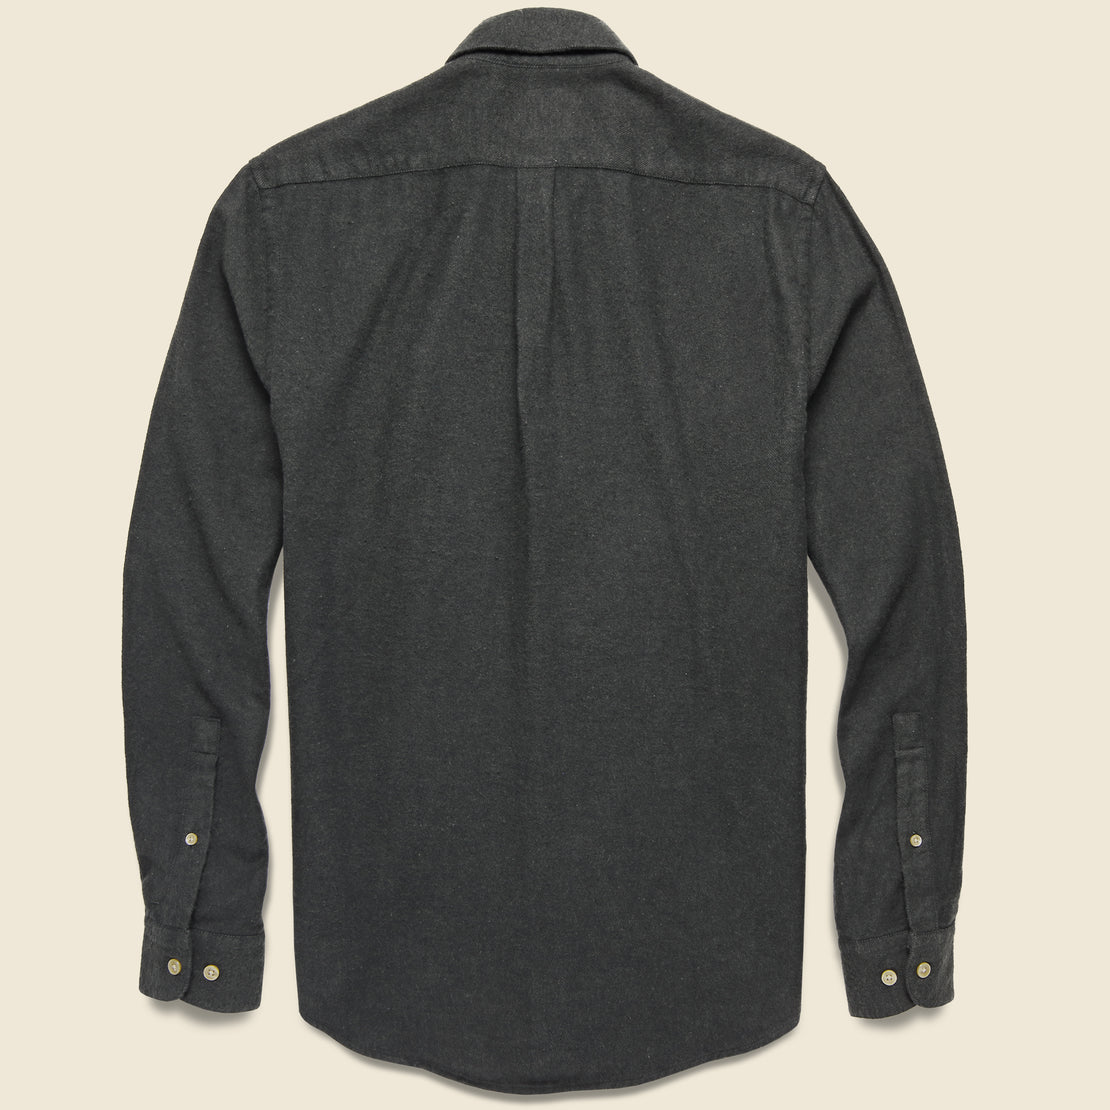 Teca Solid Flannel - Black - Portuguese Flannel - STAG Provisions - Tops - L/S Woven - Solid